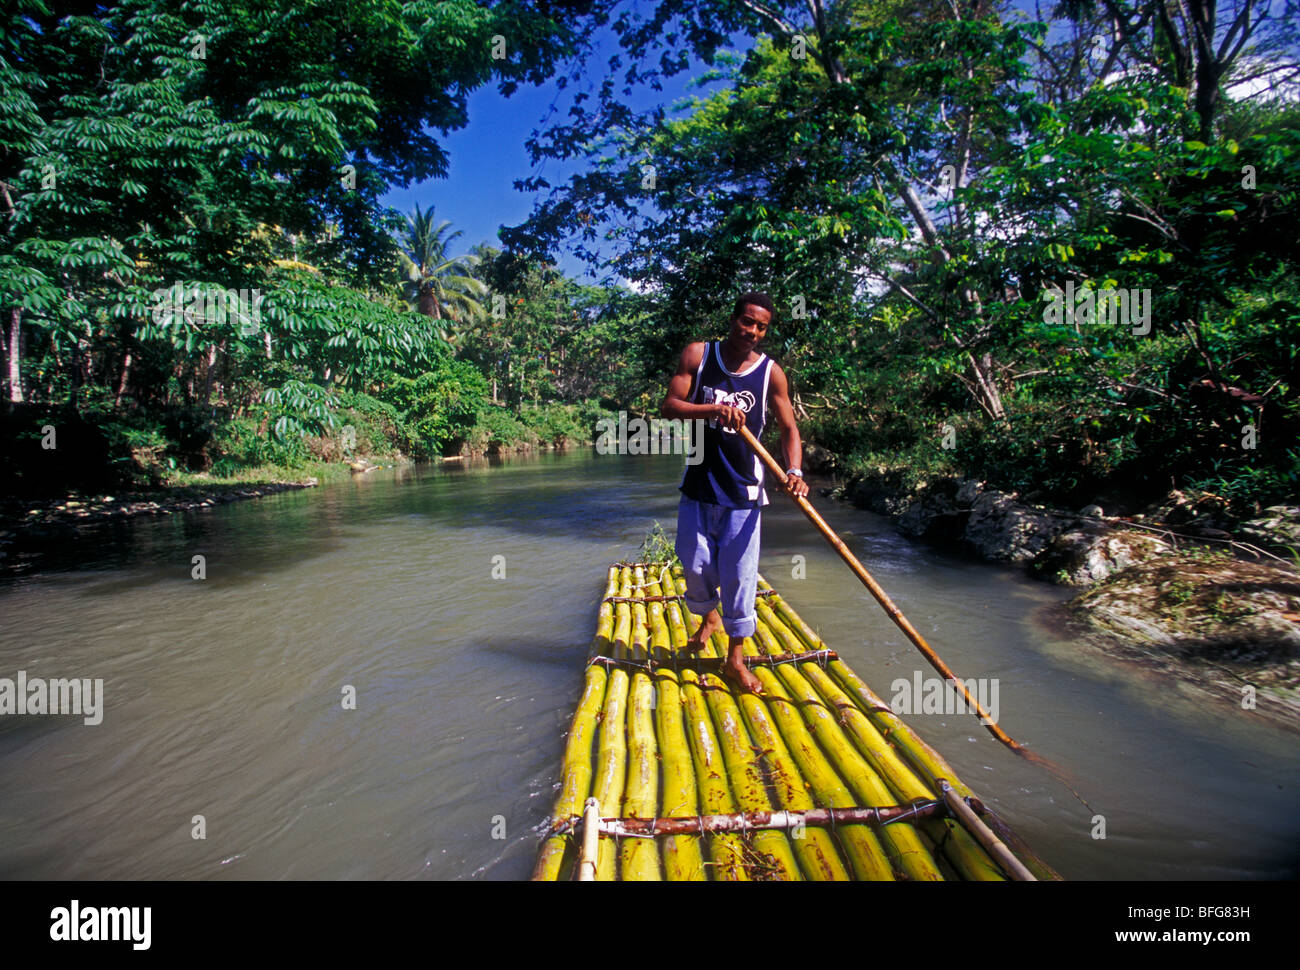 Jamaican man, adult man, tour guide, bamboo raft, bamboo raft trip, The Great River, Great River, village of Lethe, Jamaica Stock Photo